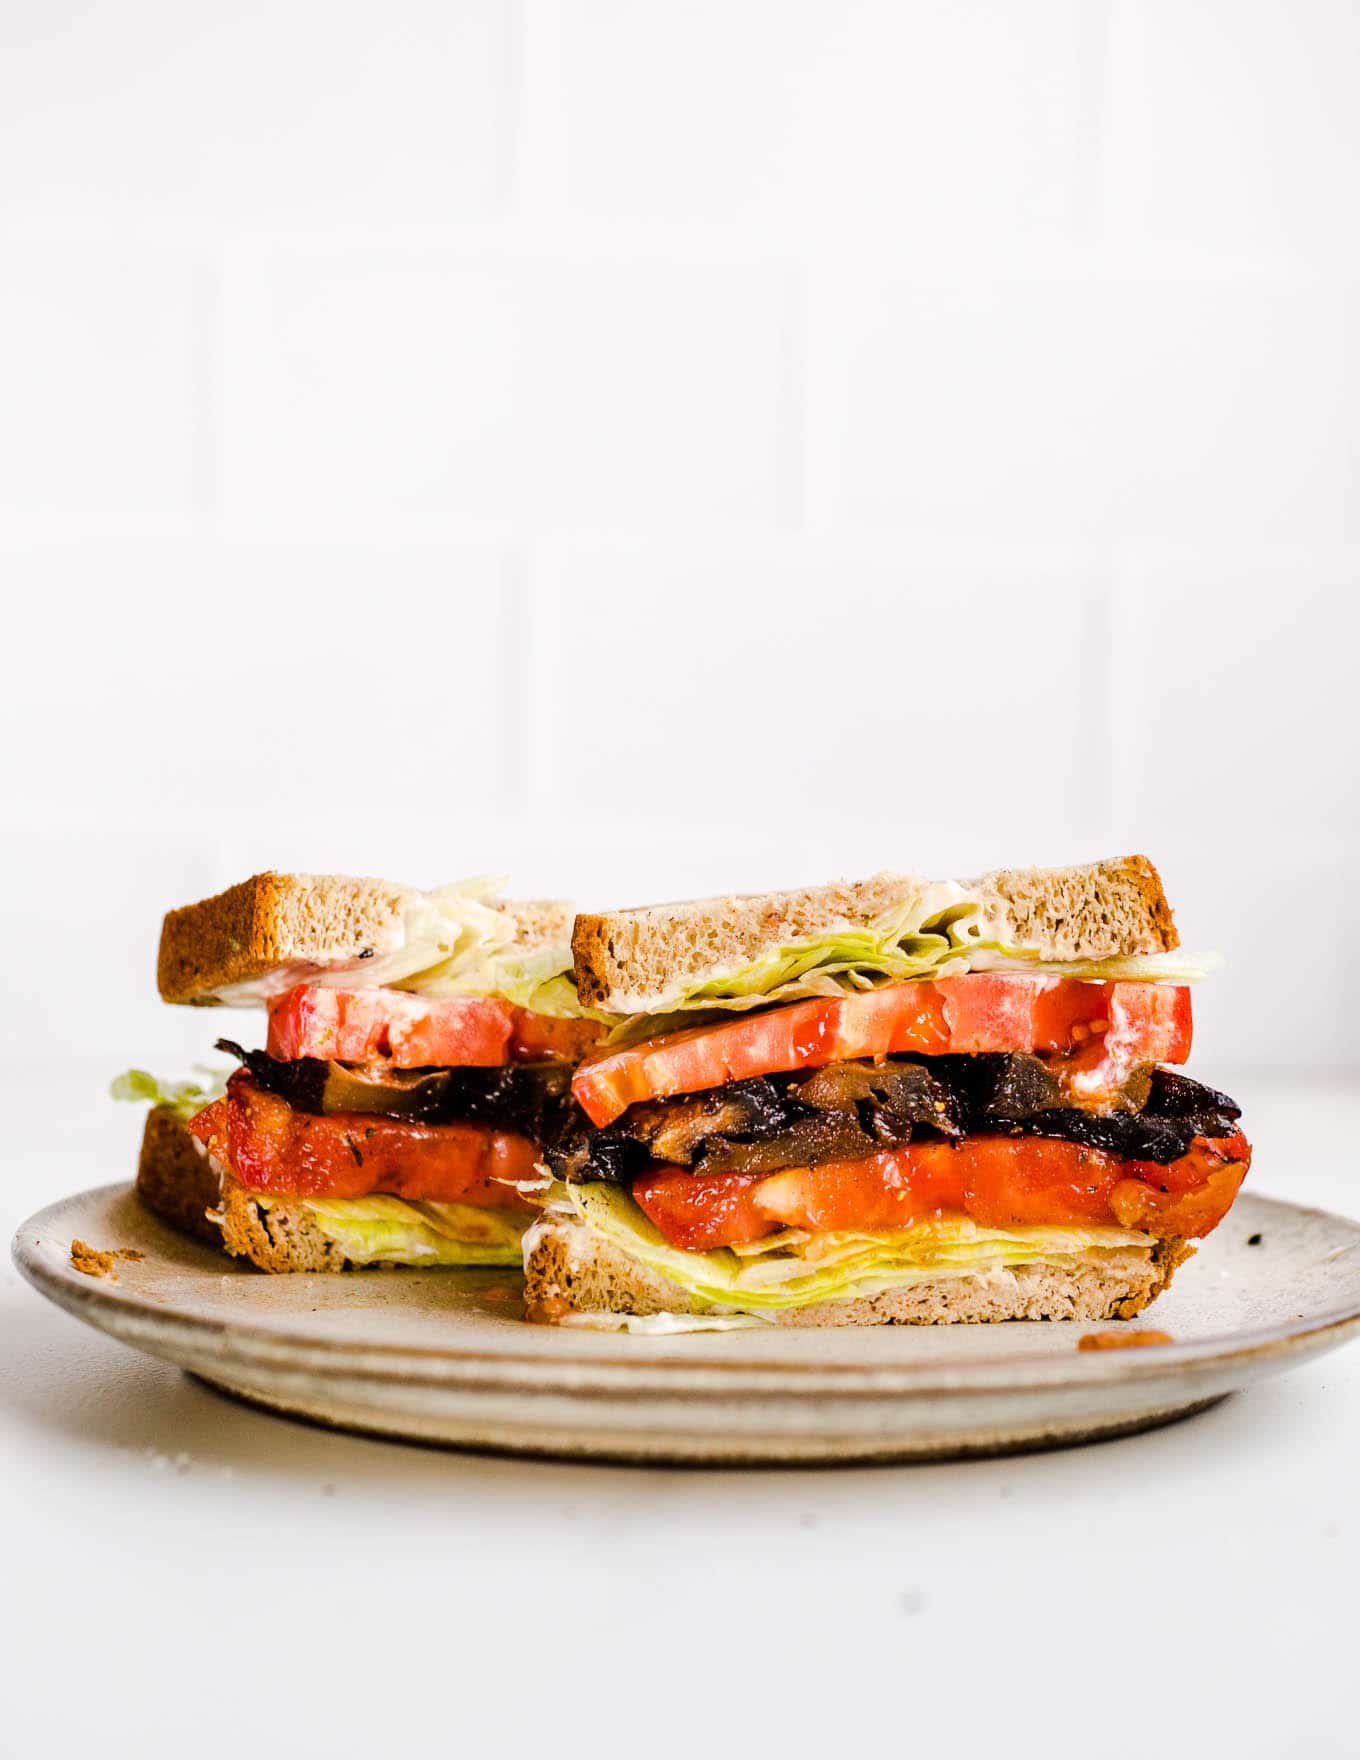 A vegan blt sandwich on plate.